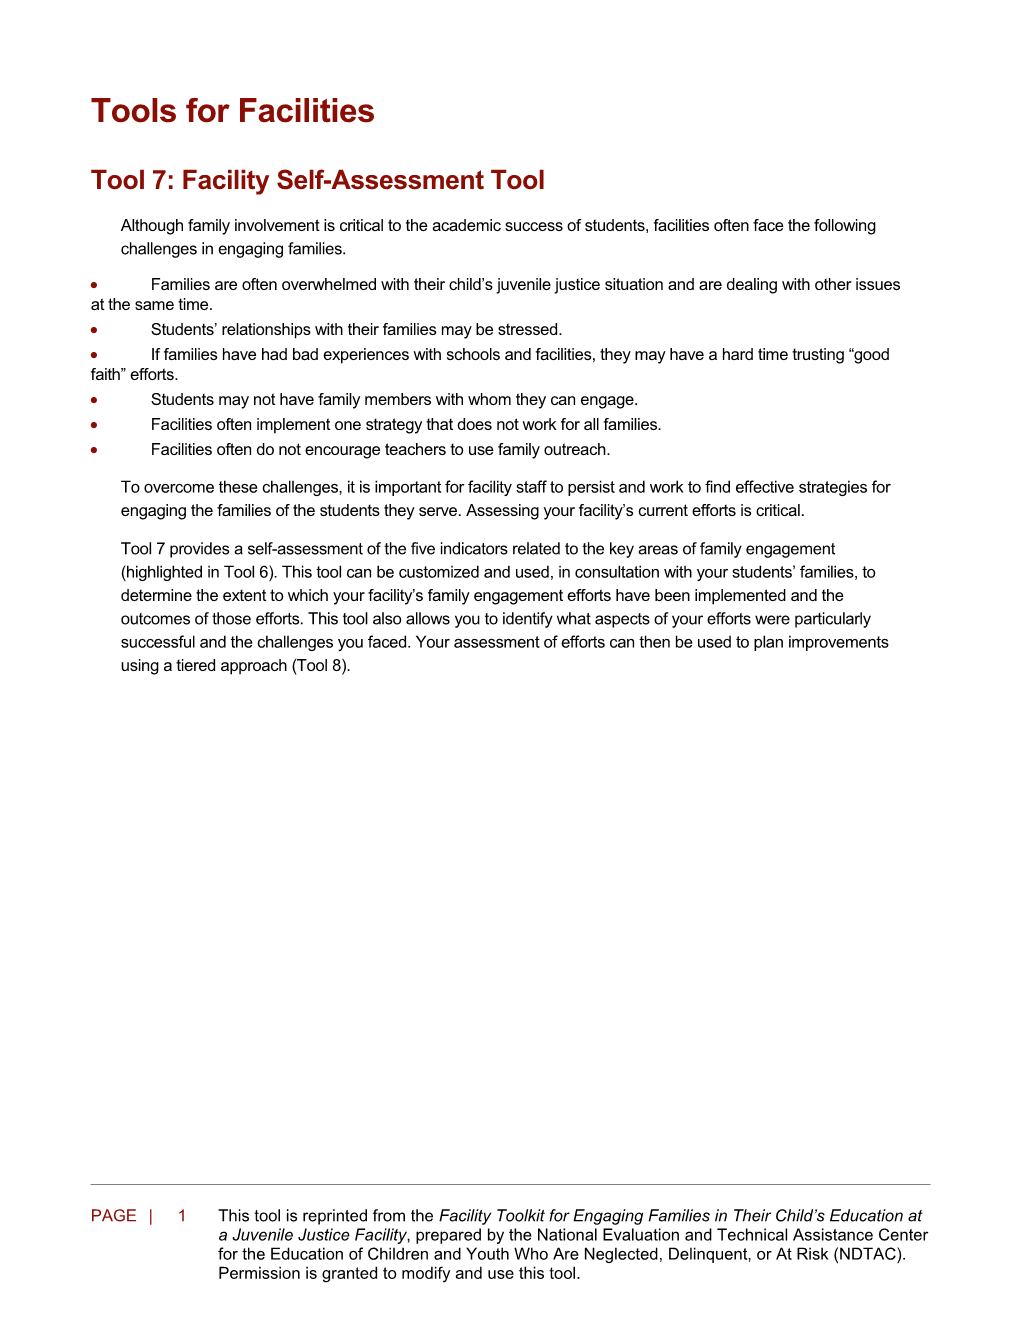 Tool 7: Facility Self-Assessment Tool